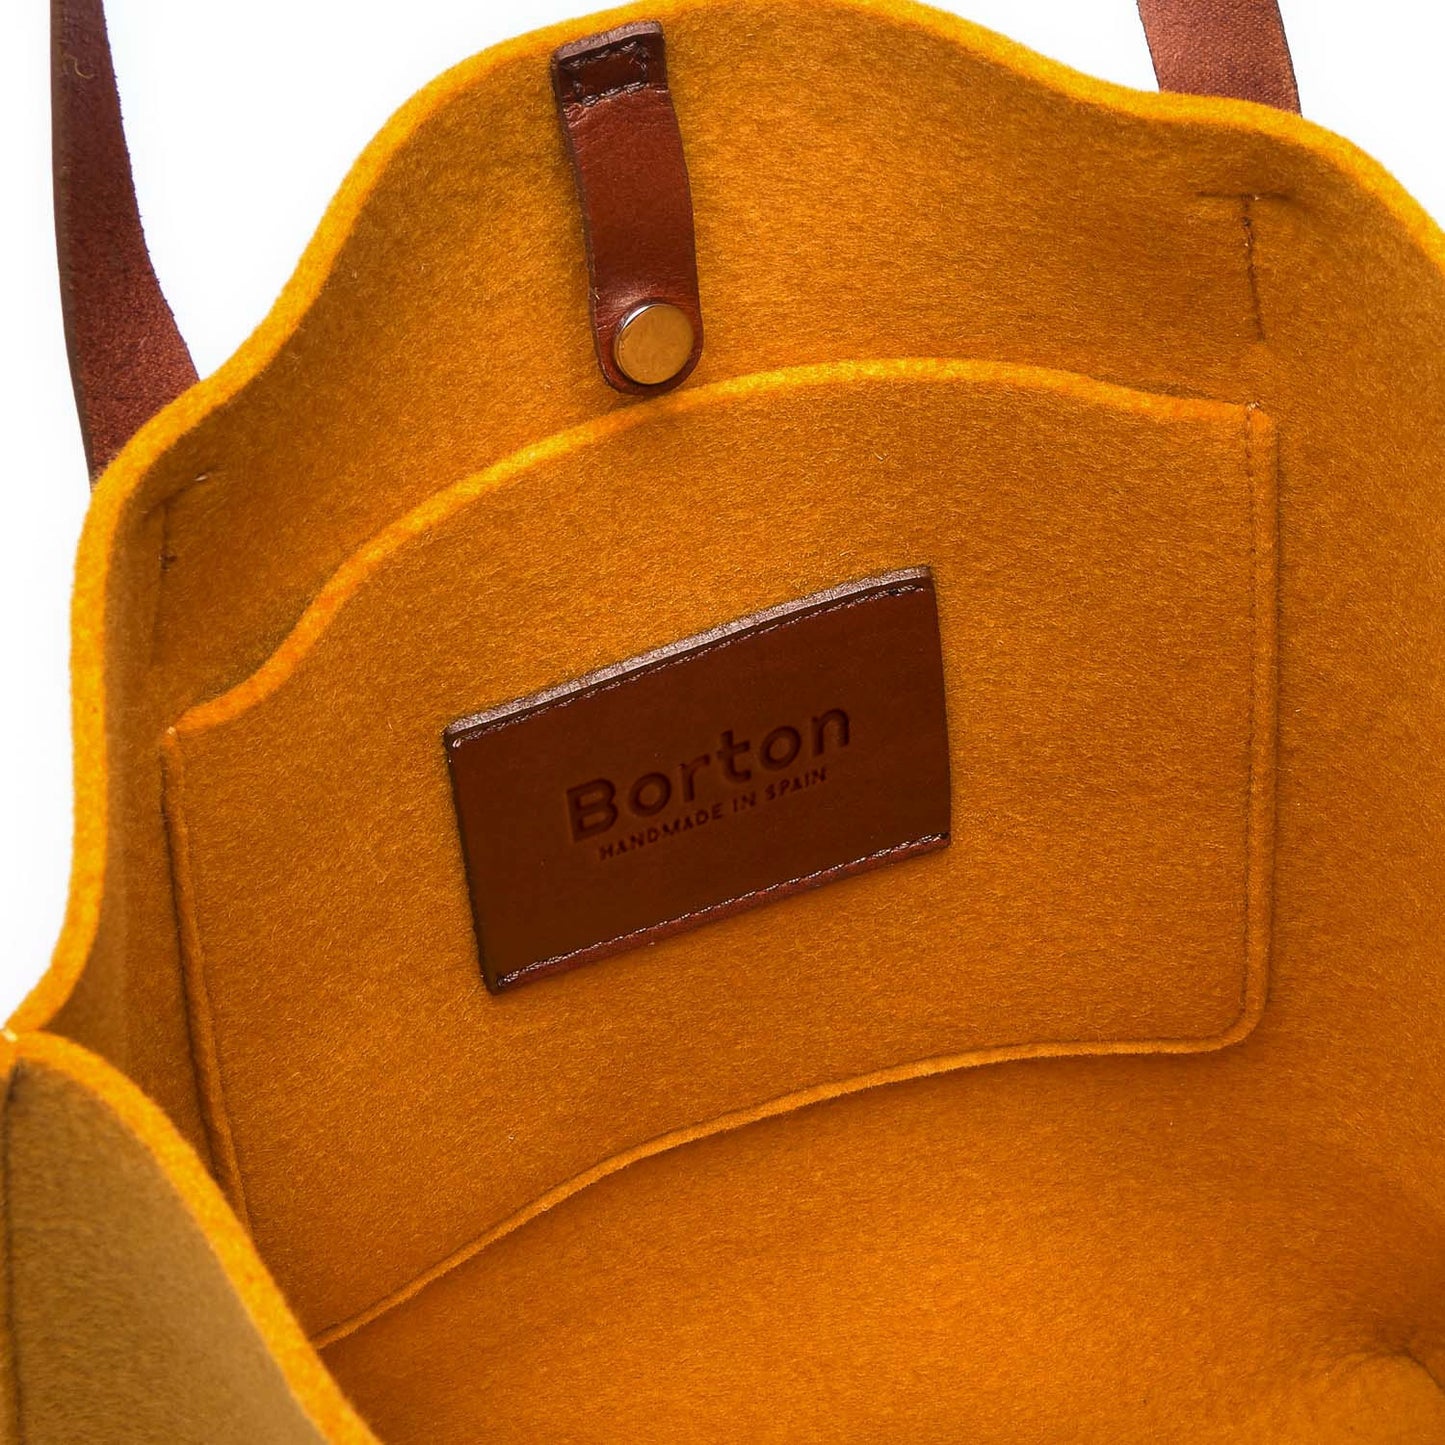 Mery Tote Bag Yellow Felt & Tan Leather